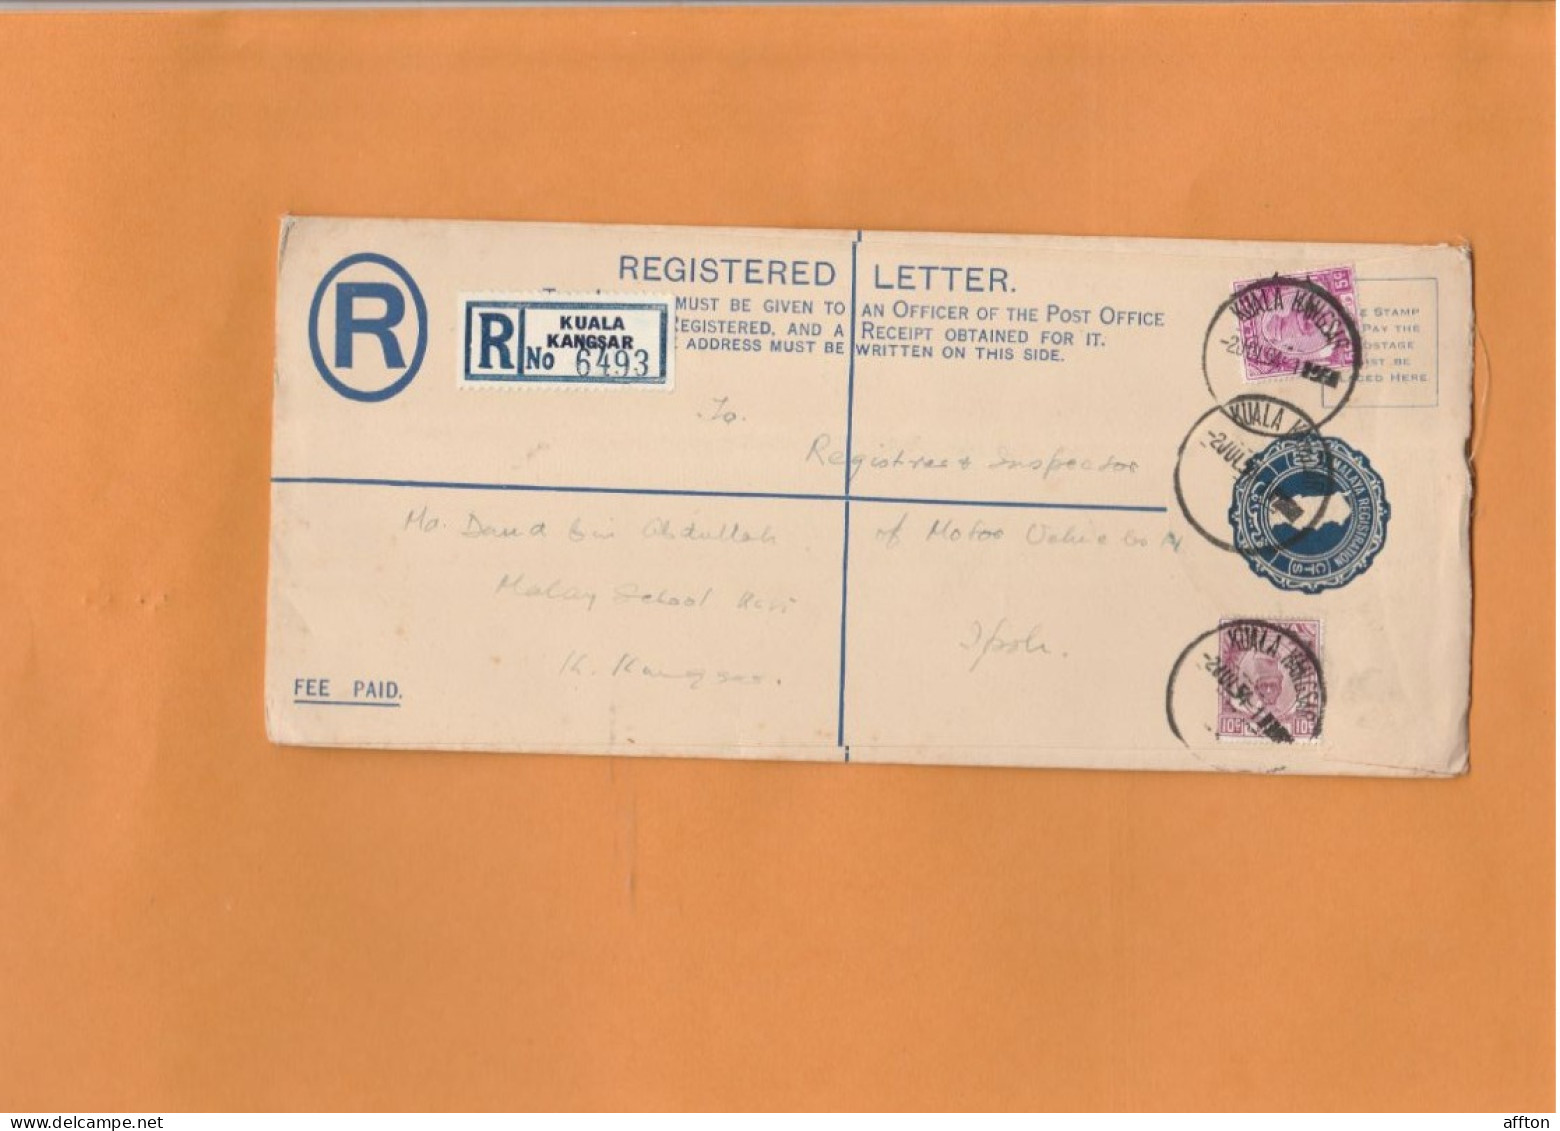 Kuala Kangsar Malaysia 1954 Registered Cover Mailed - Federated Malay States